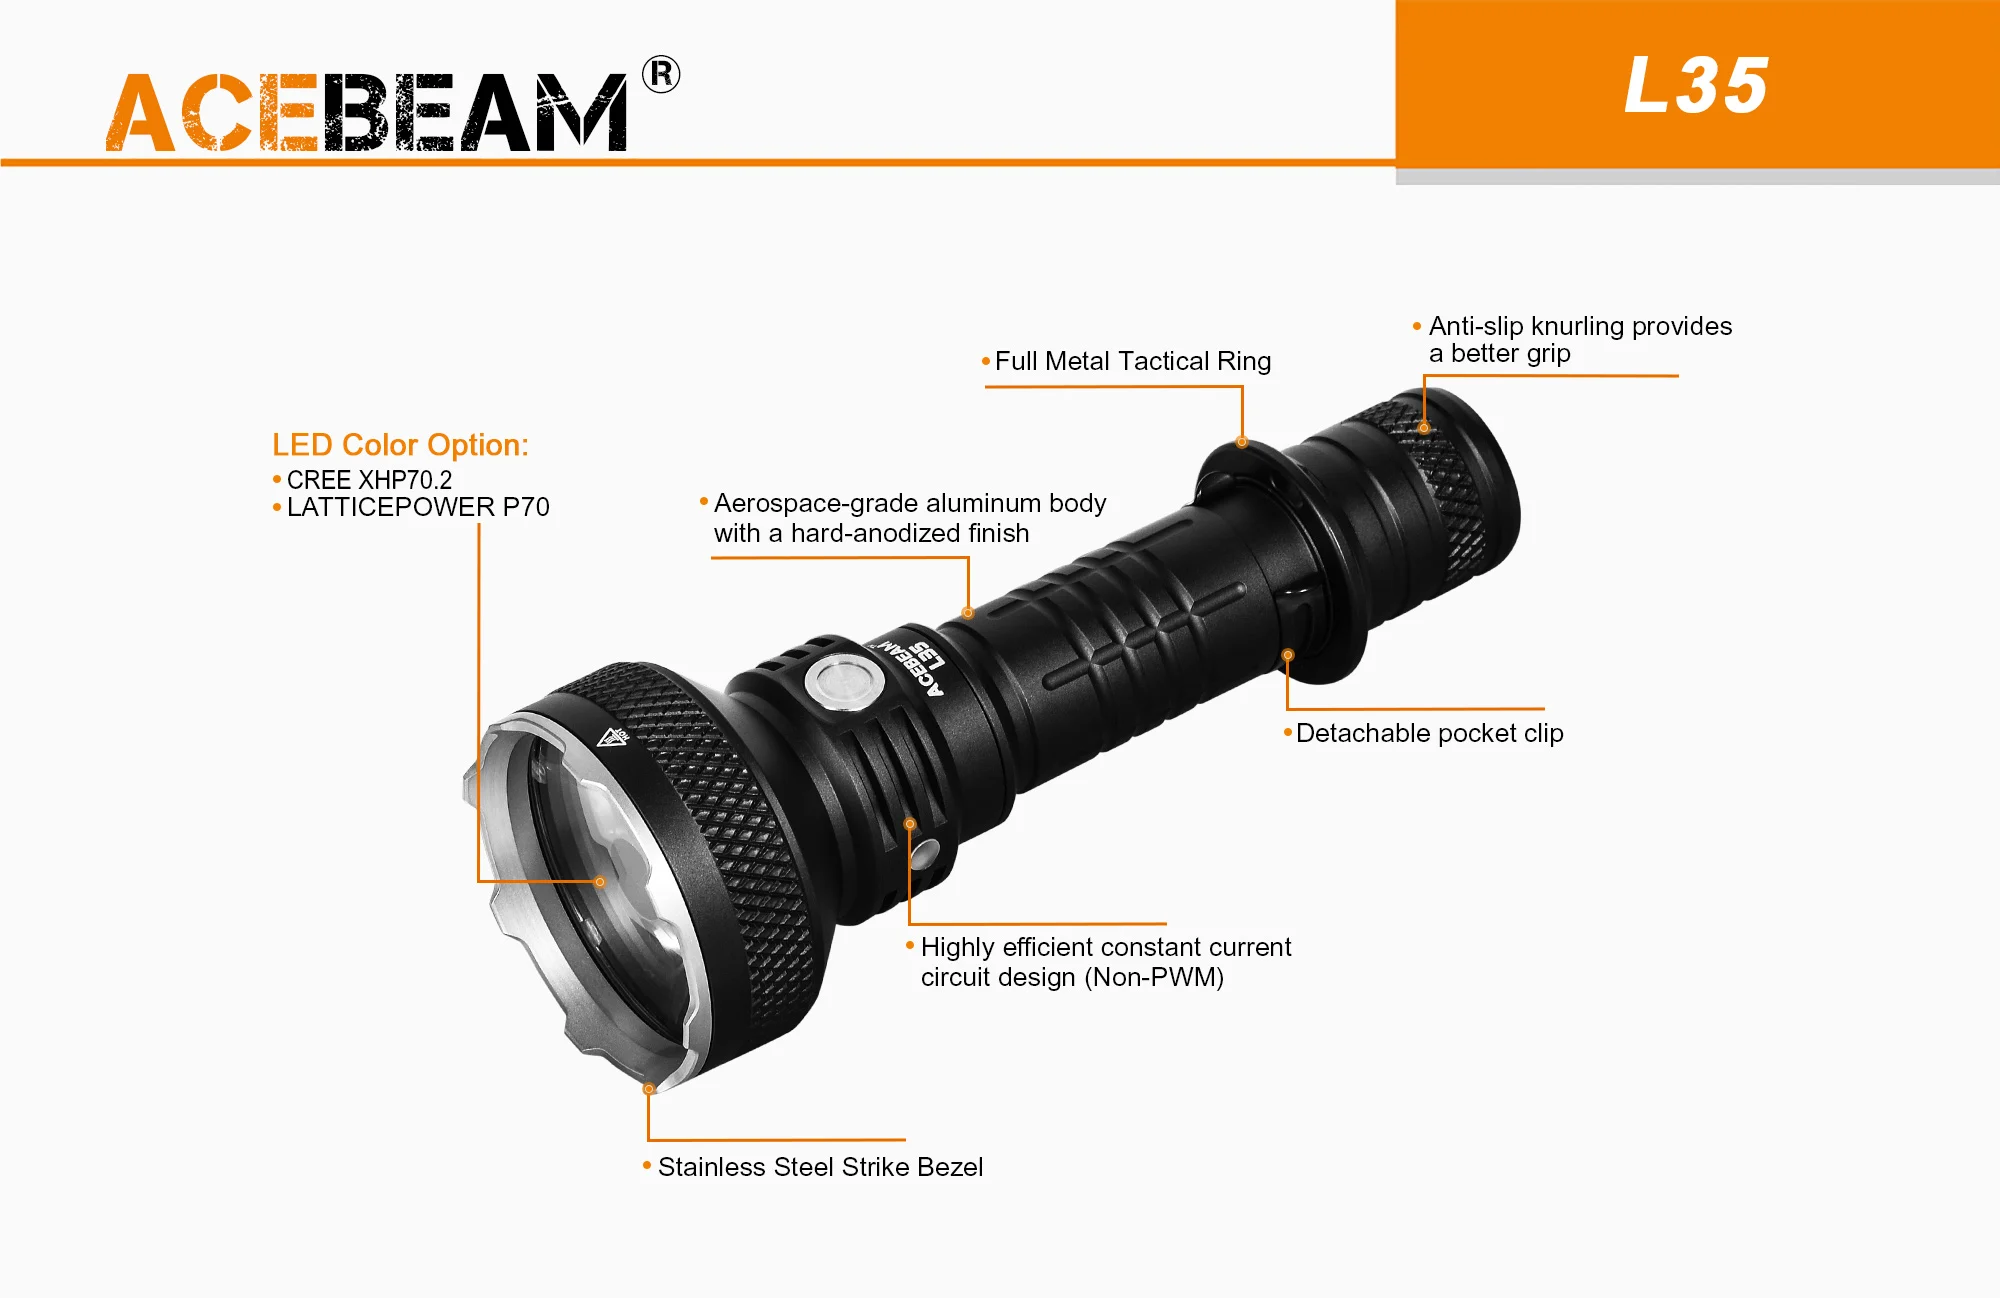 Acebeam L35 1x XHP70.2 LED 5000 Lumens Tactical Flashlight